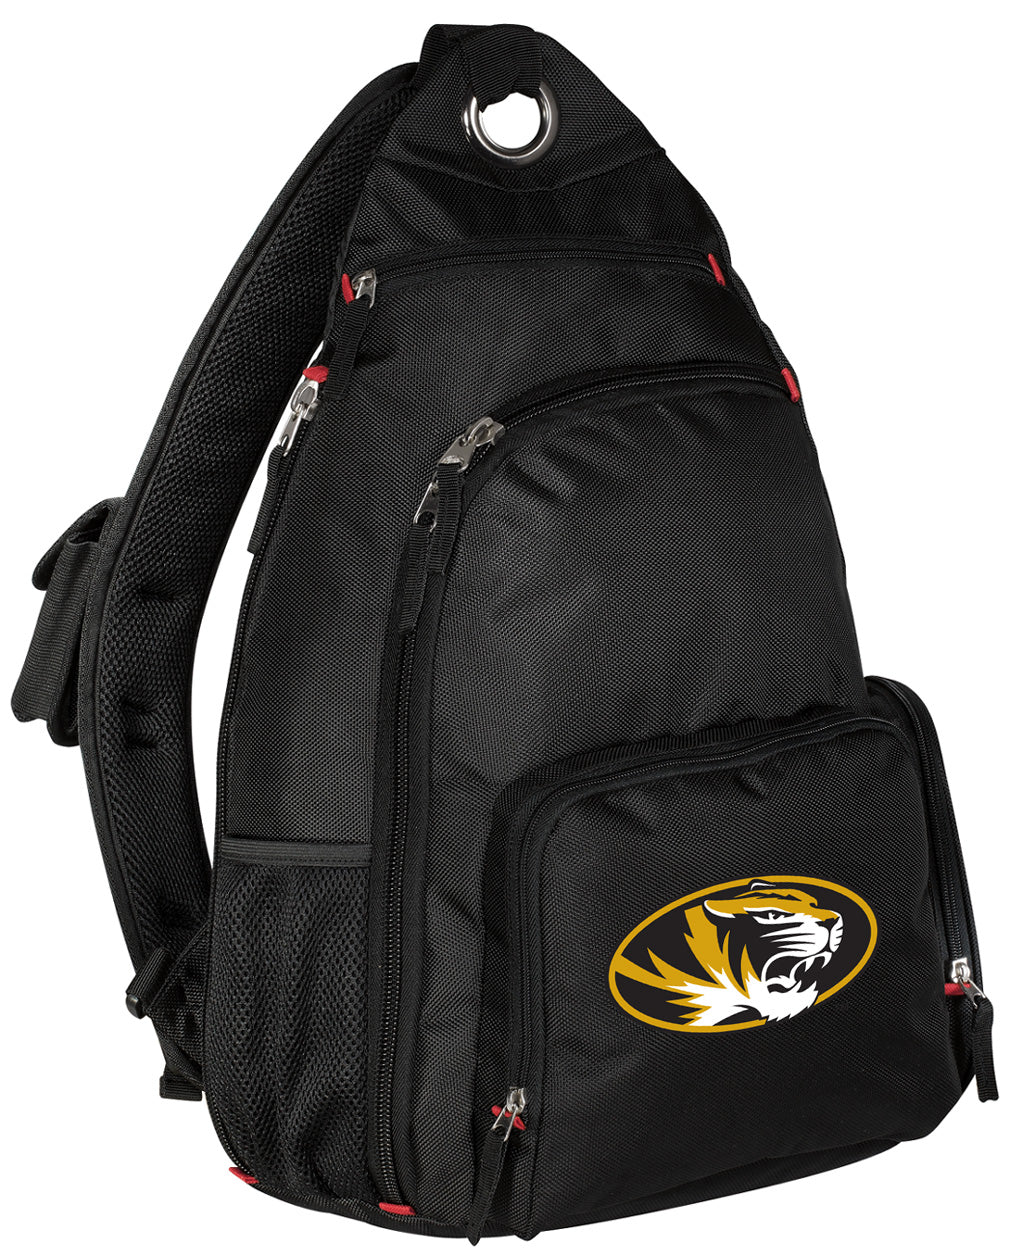 University of Missouri Sling Backpack Mizzou Crossbody Bag